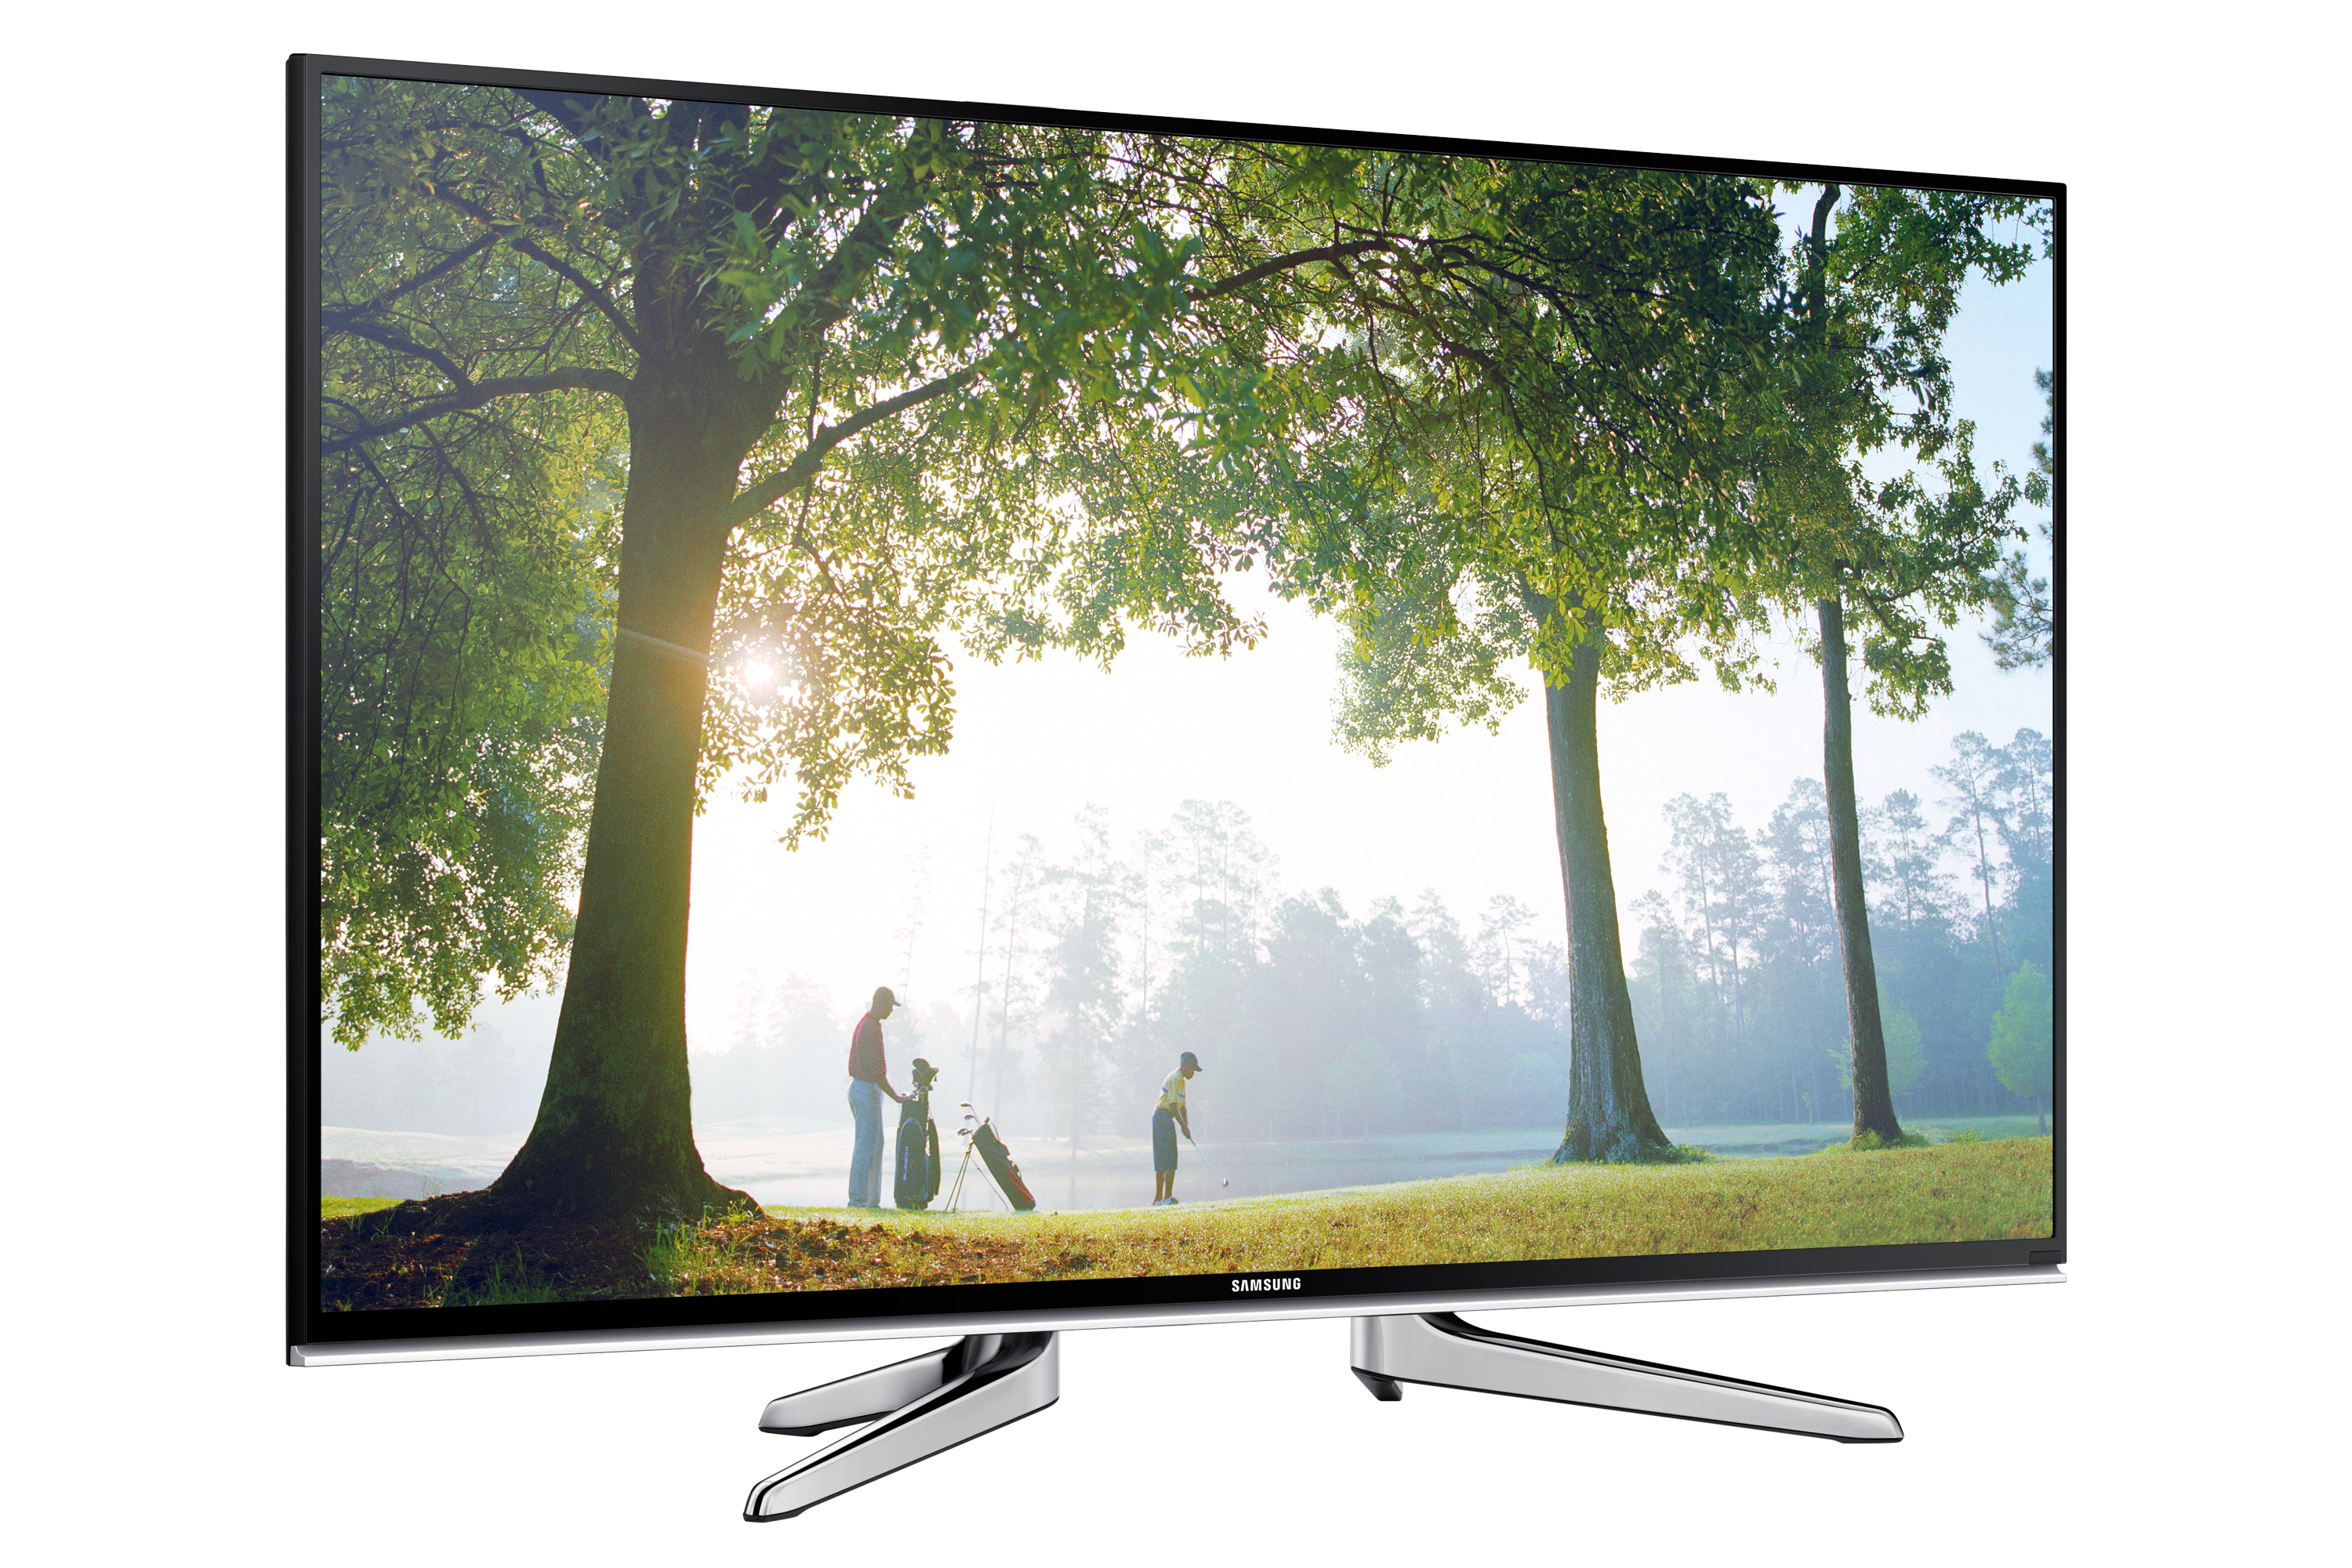 Led телевизоров samsung smart tv. Samsung ue40h6200 Smart TV. Телевизор Samsung ue40h6200ak. Samsung led TV ue48h6200ak. Телевизор самсунг ue40h6203ak.